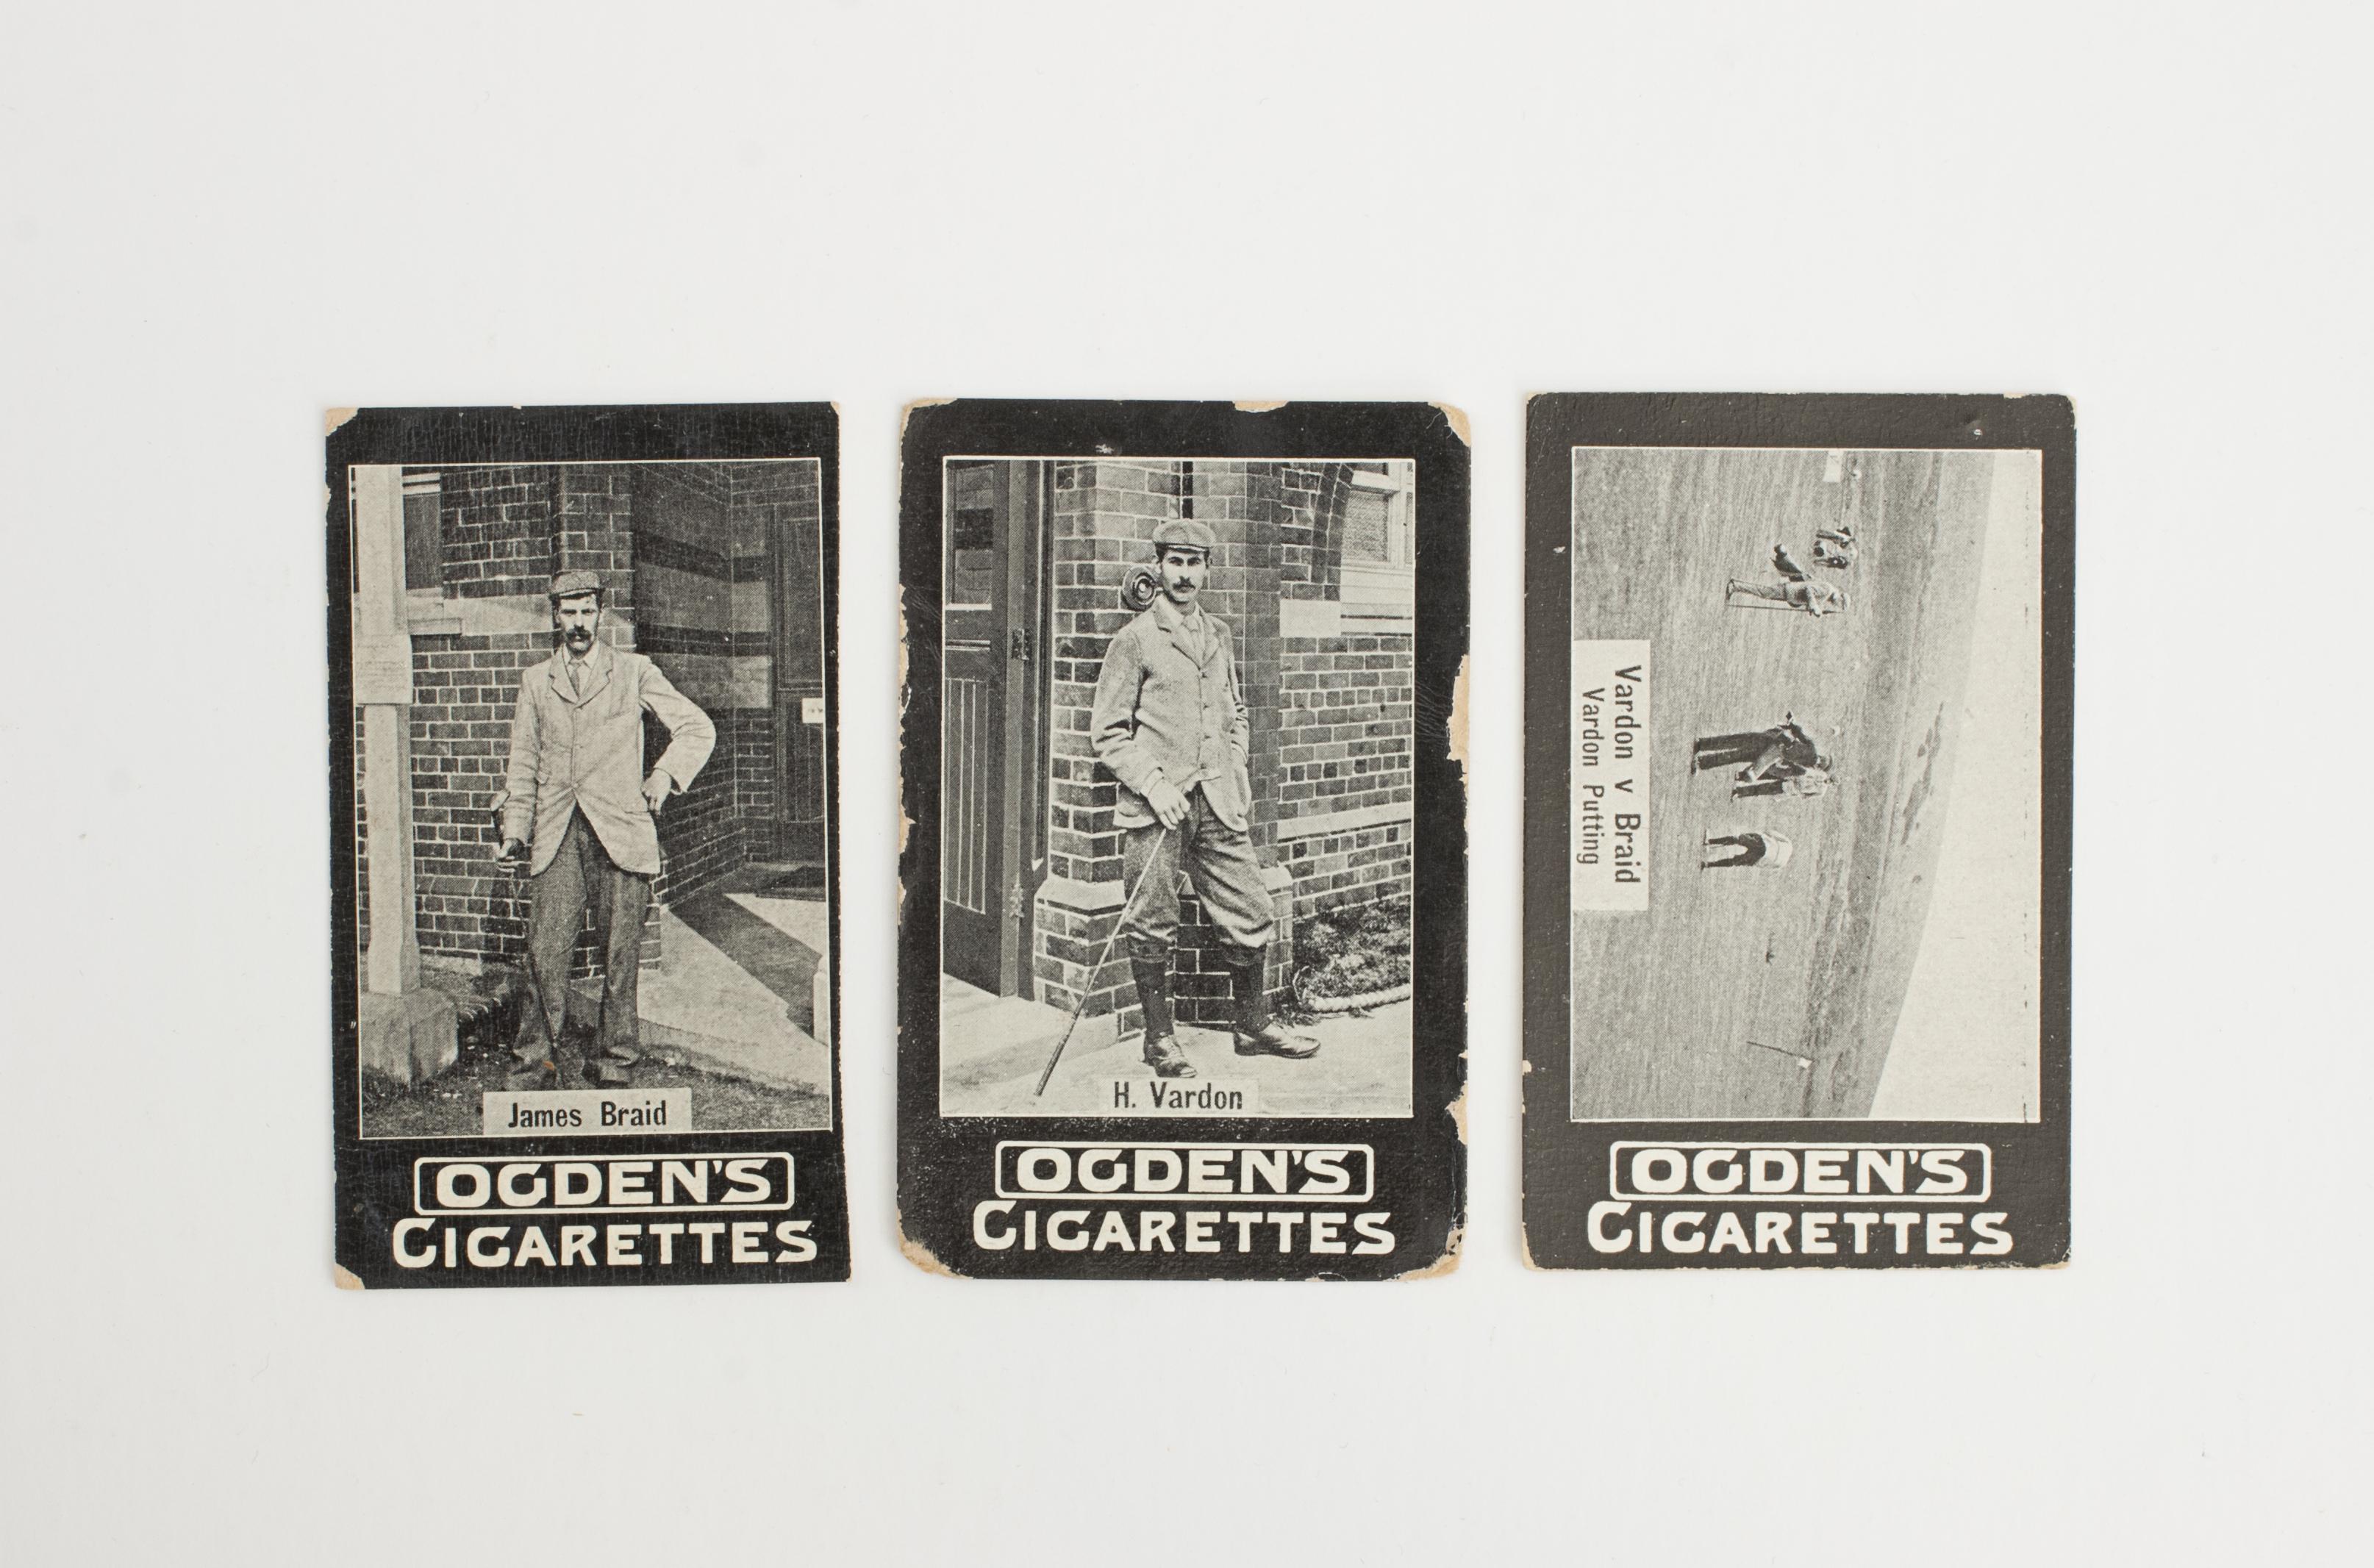 Ogden Tabs Golf Cigarette Cards.
Les trois cartes 